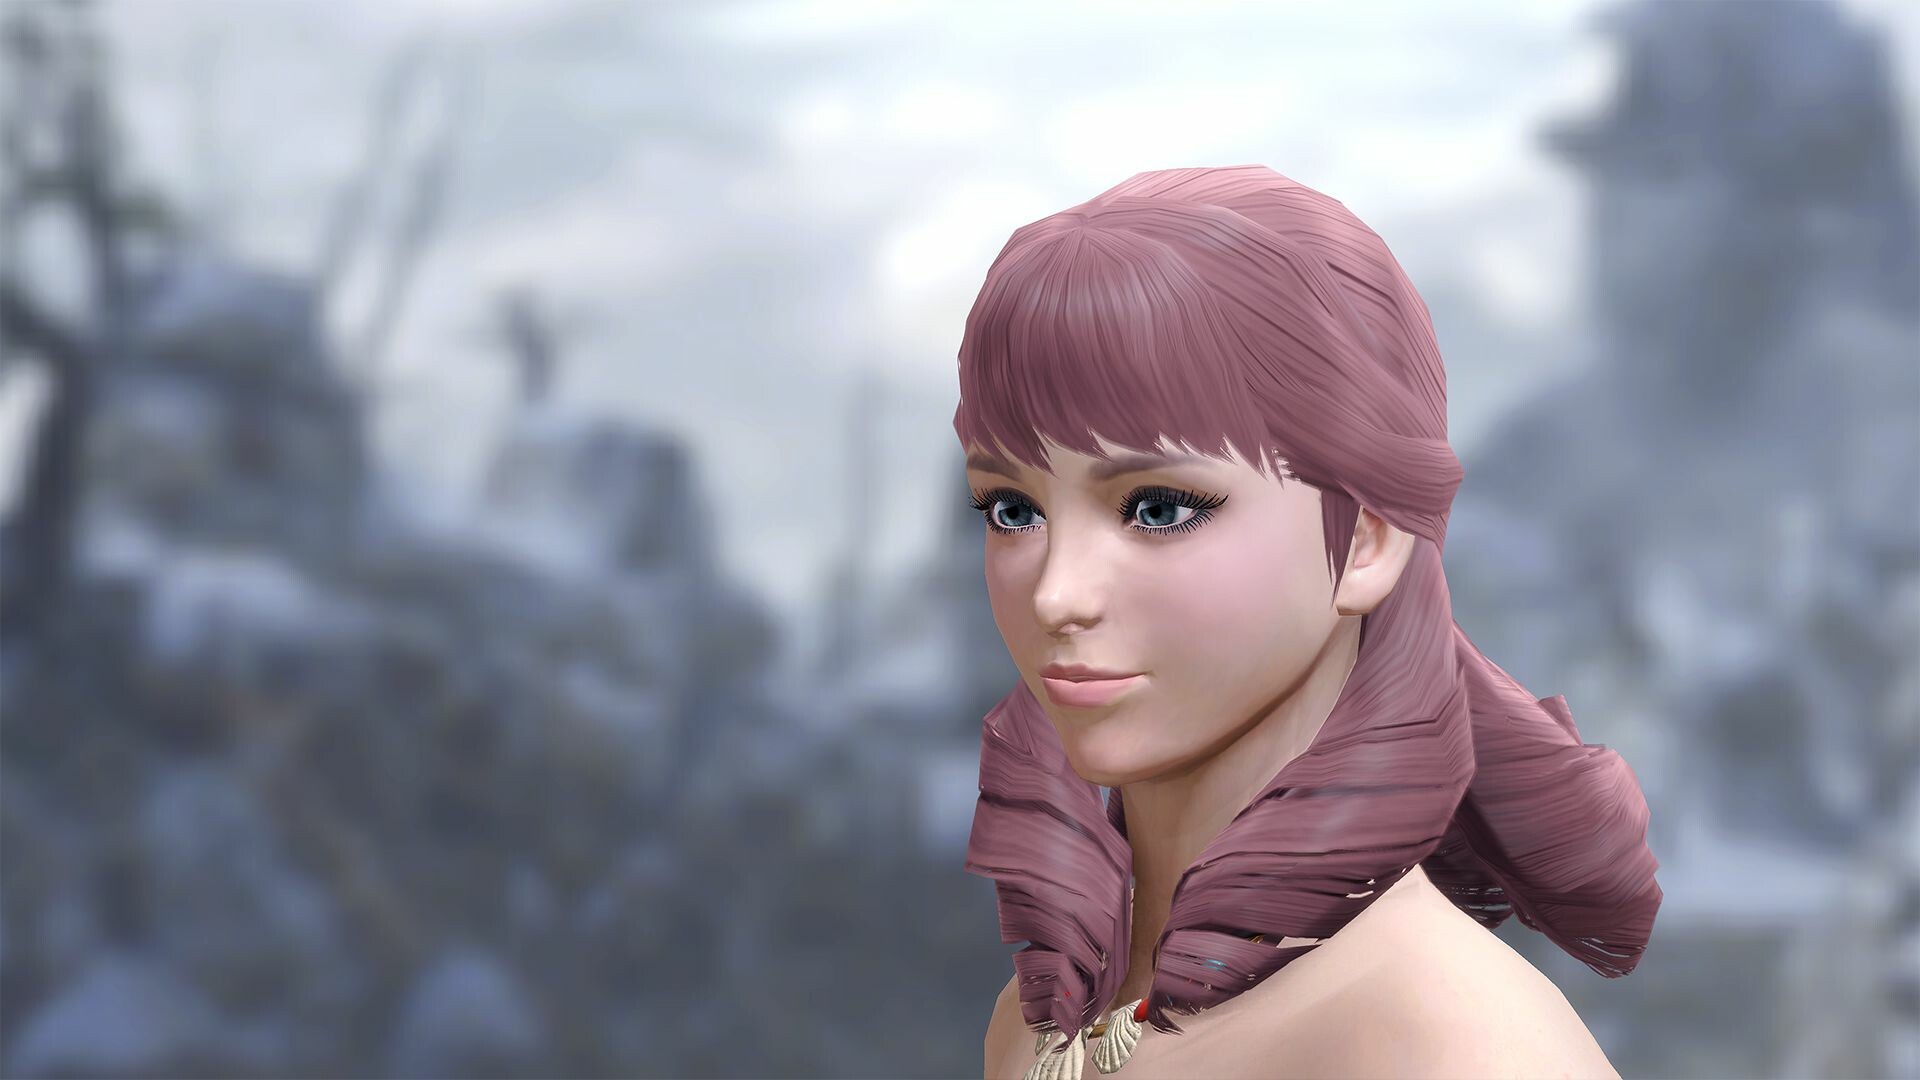 Monster Hunter Rise - "Princess Curls" hairstyle Featured Screenshot #1